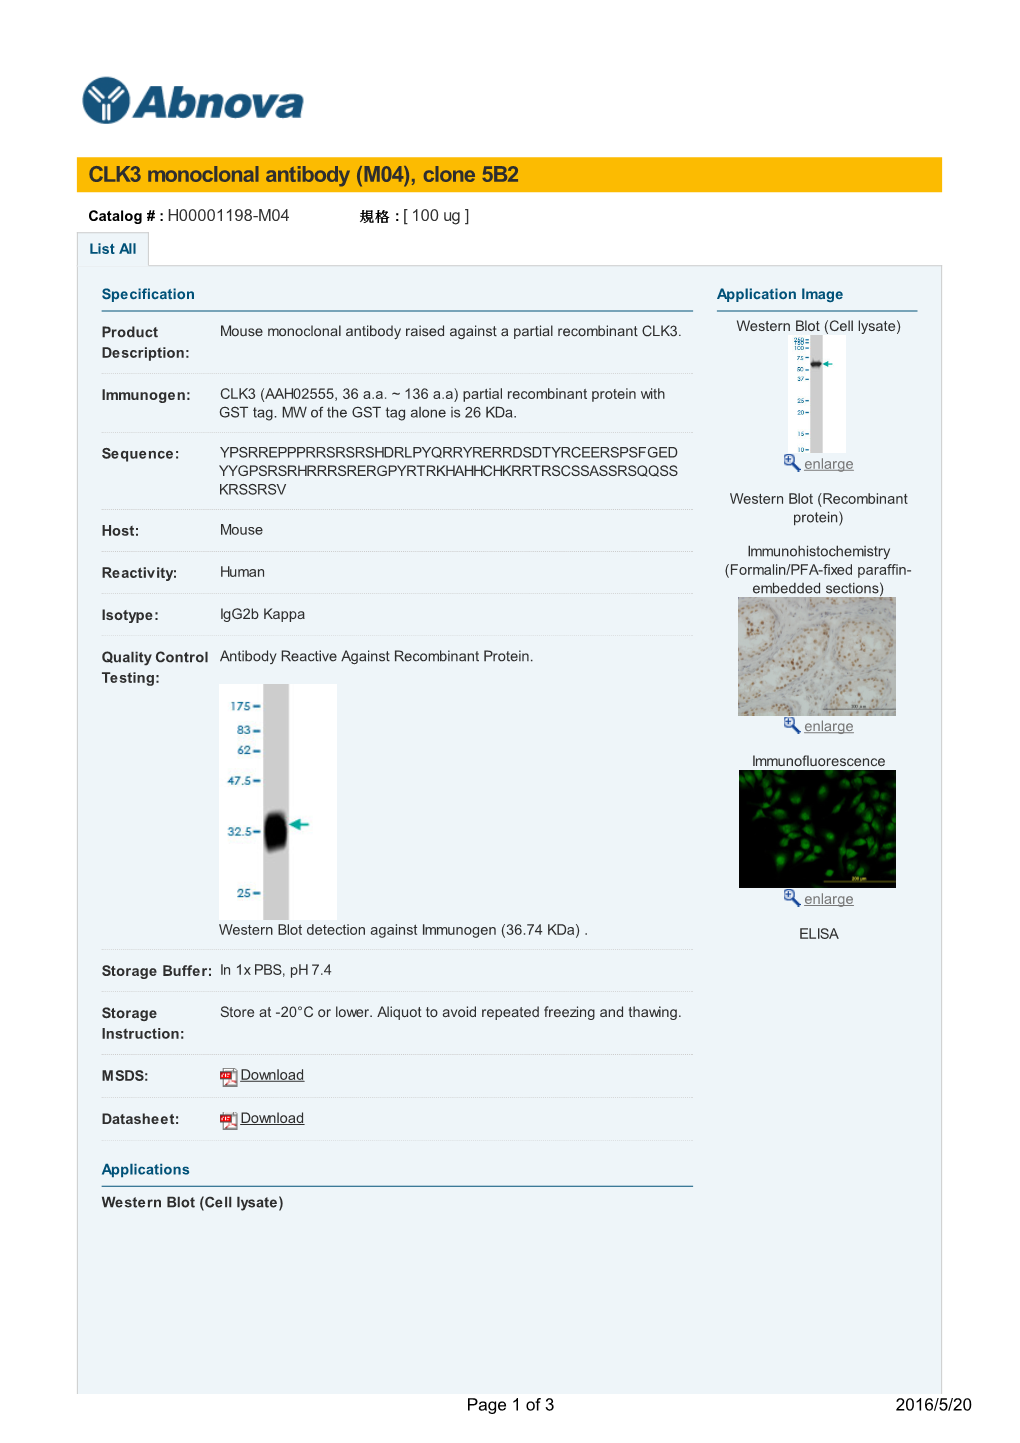 CLK3 Monoclonal Antibody (M04), Clone 5B2